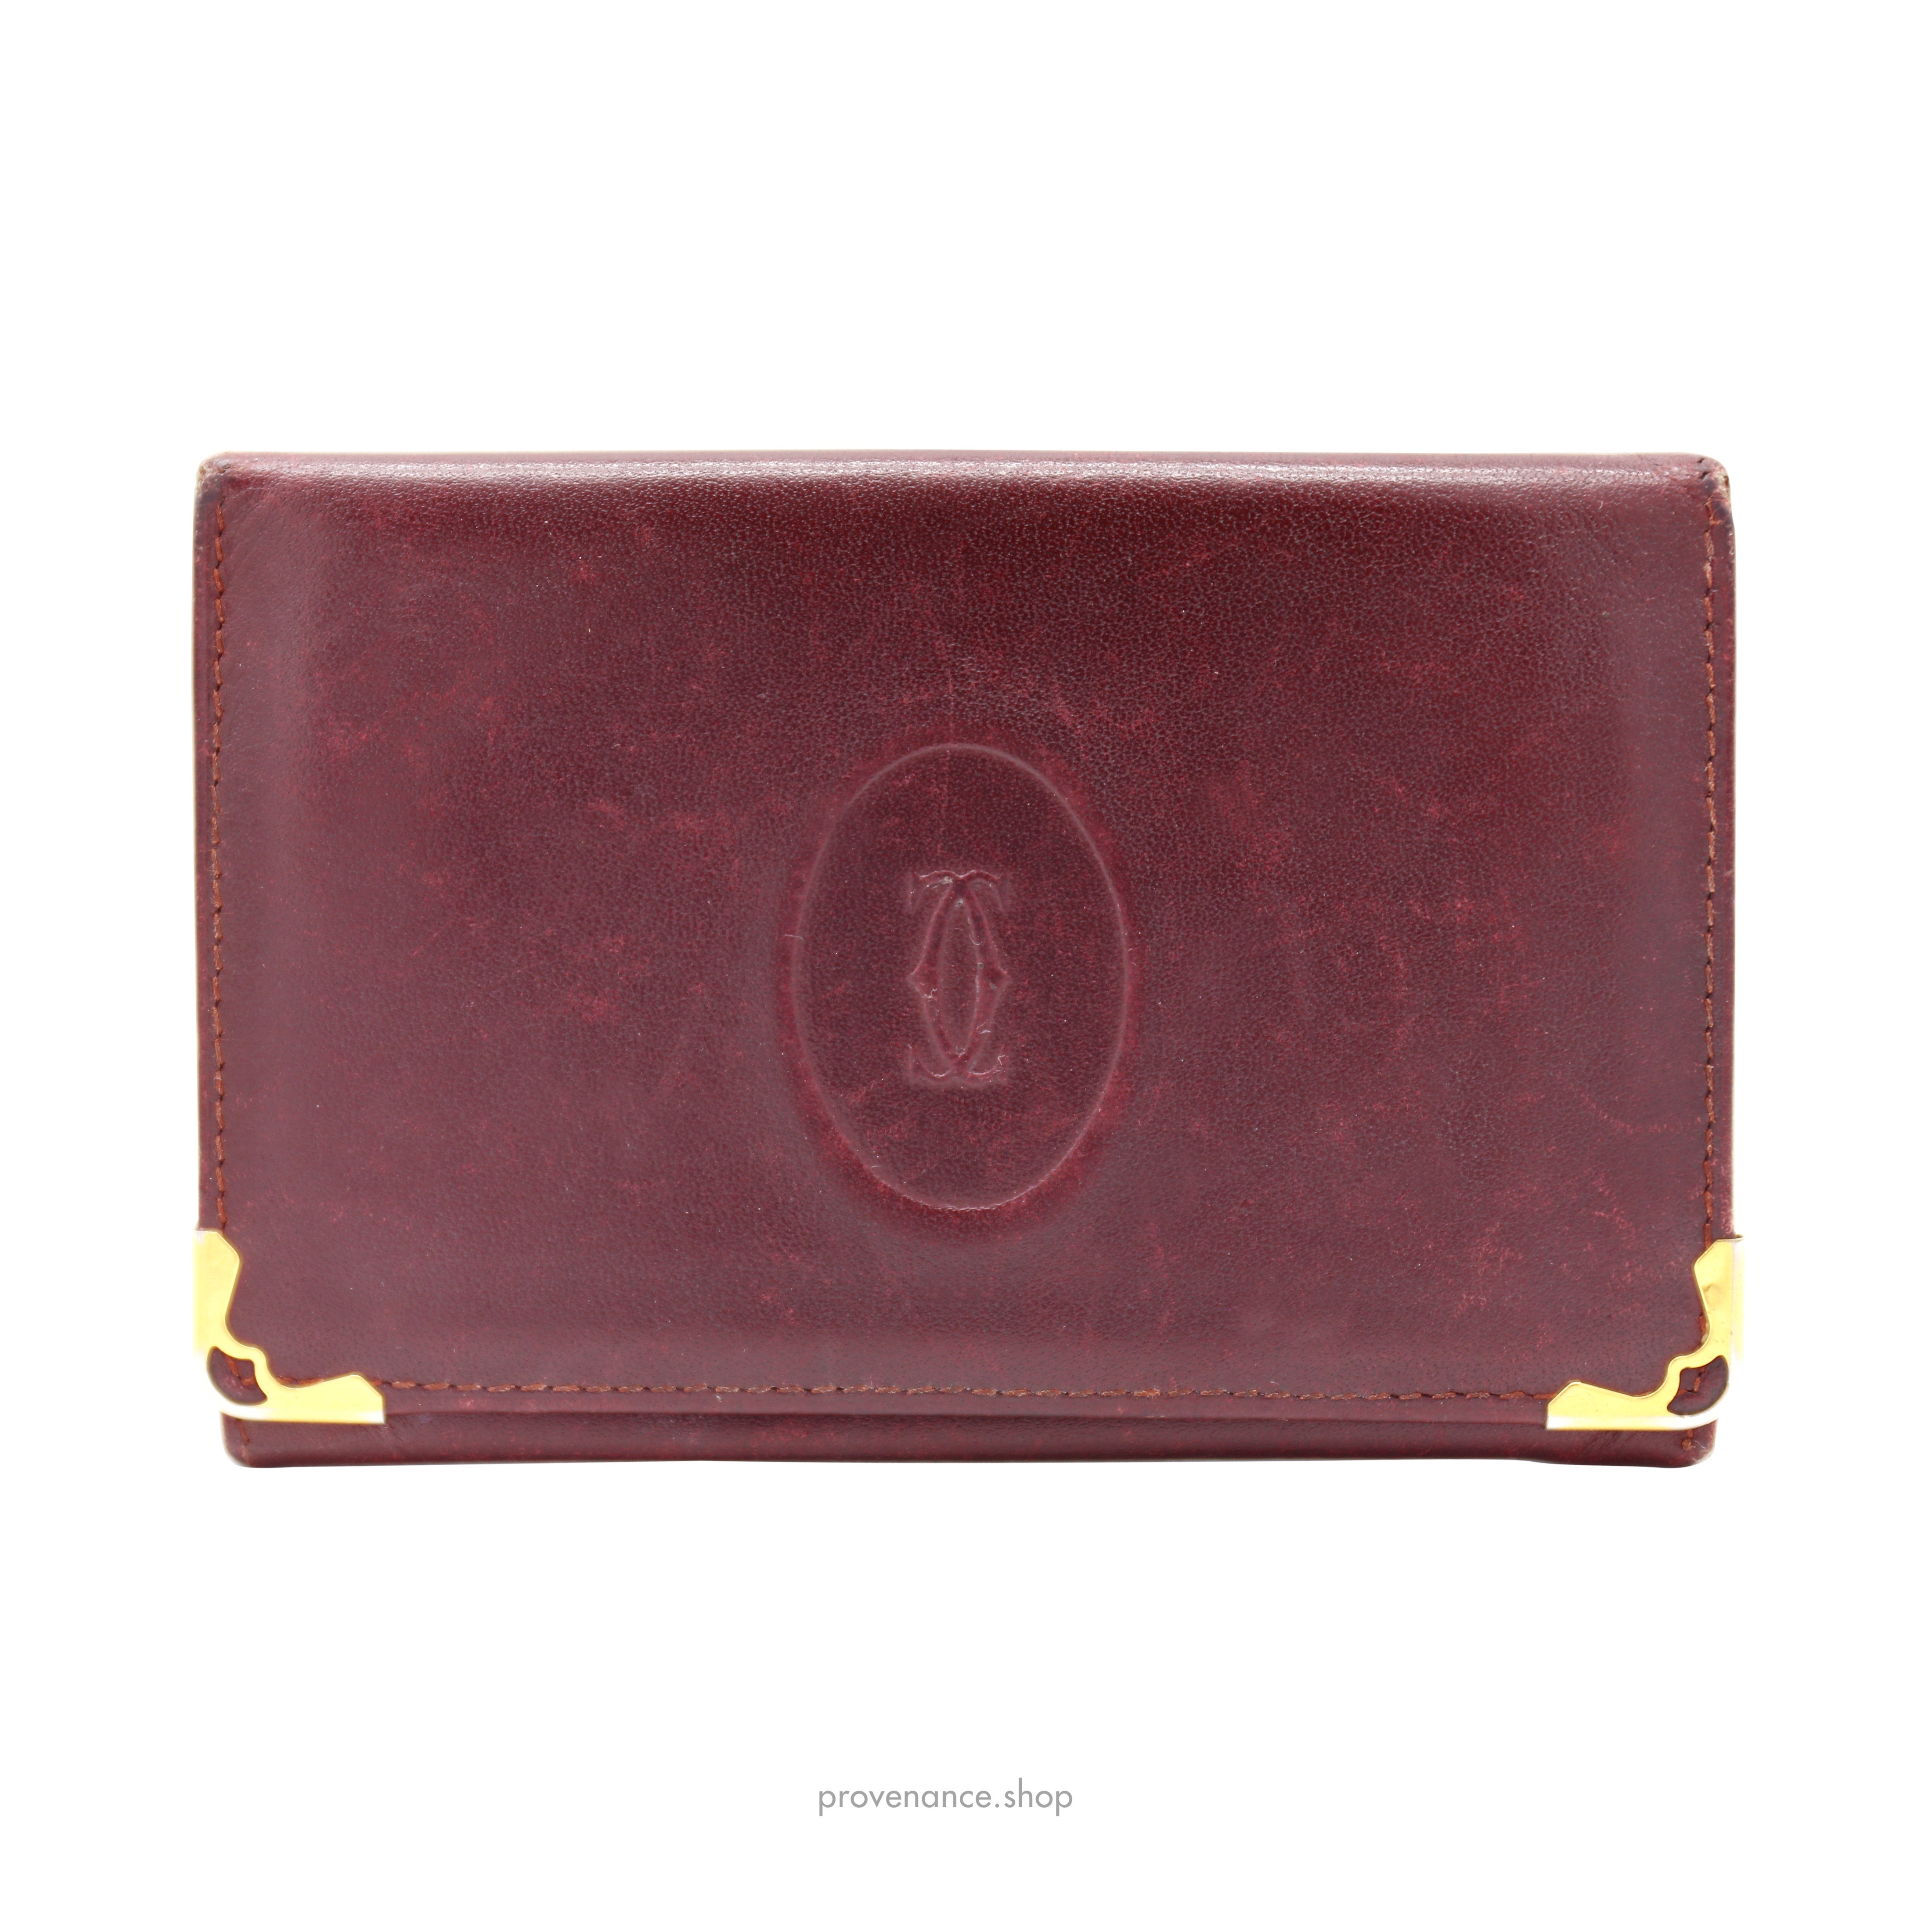 Cartier Pocket Organizer Wallet - Burgundy Leather - 1